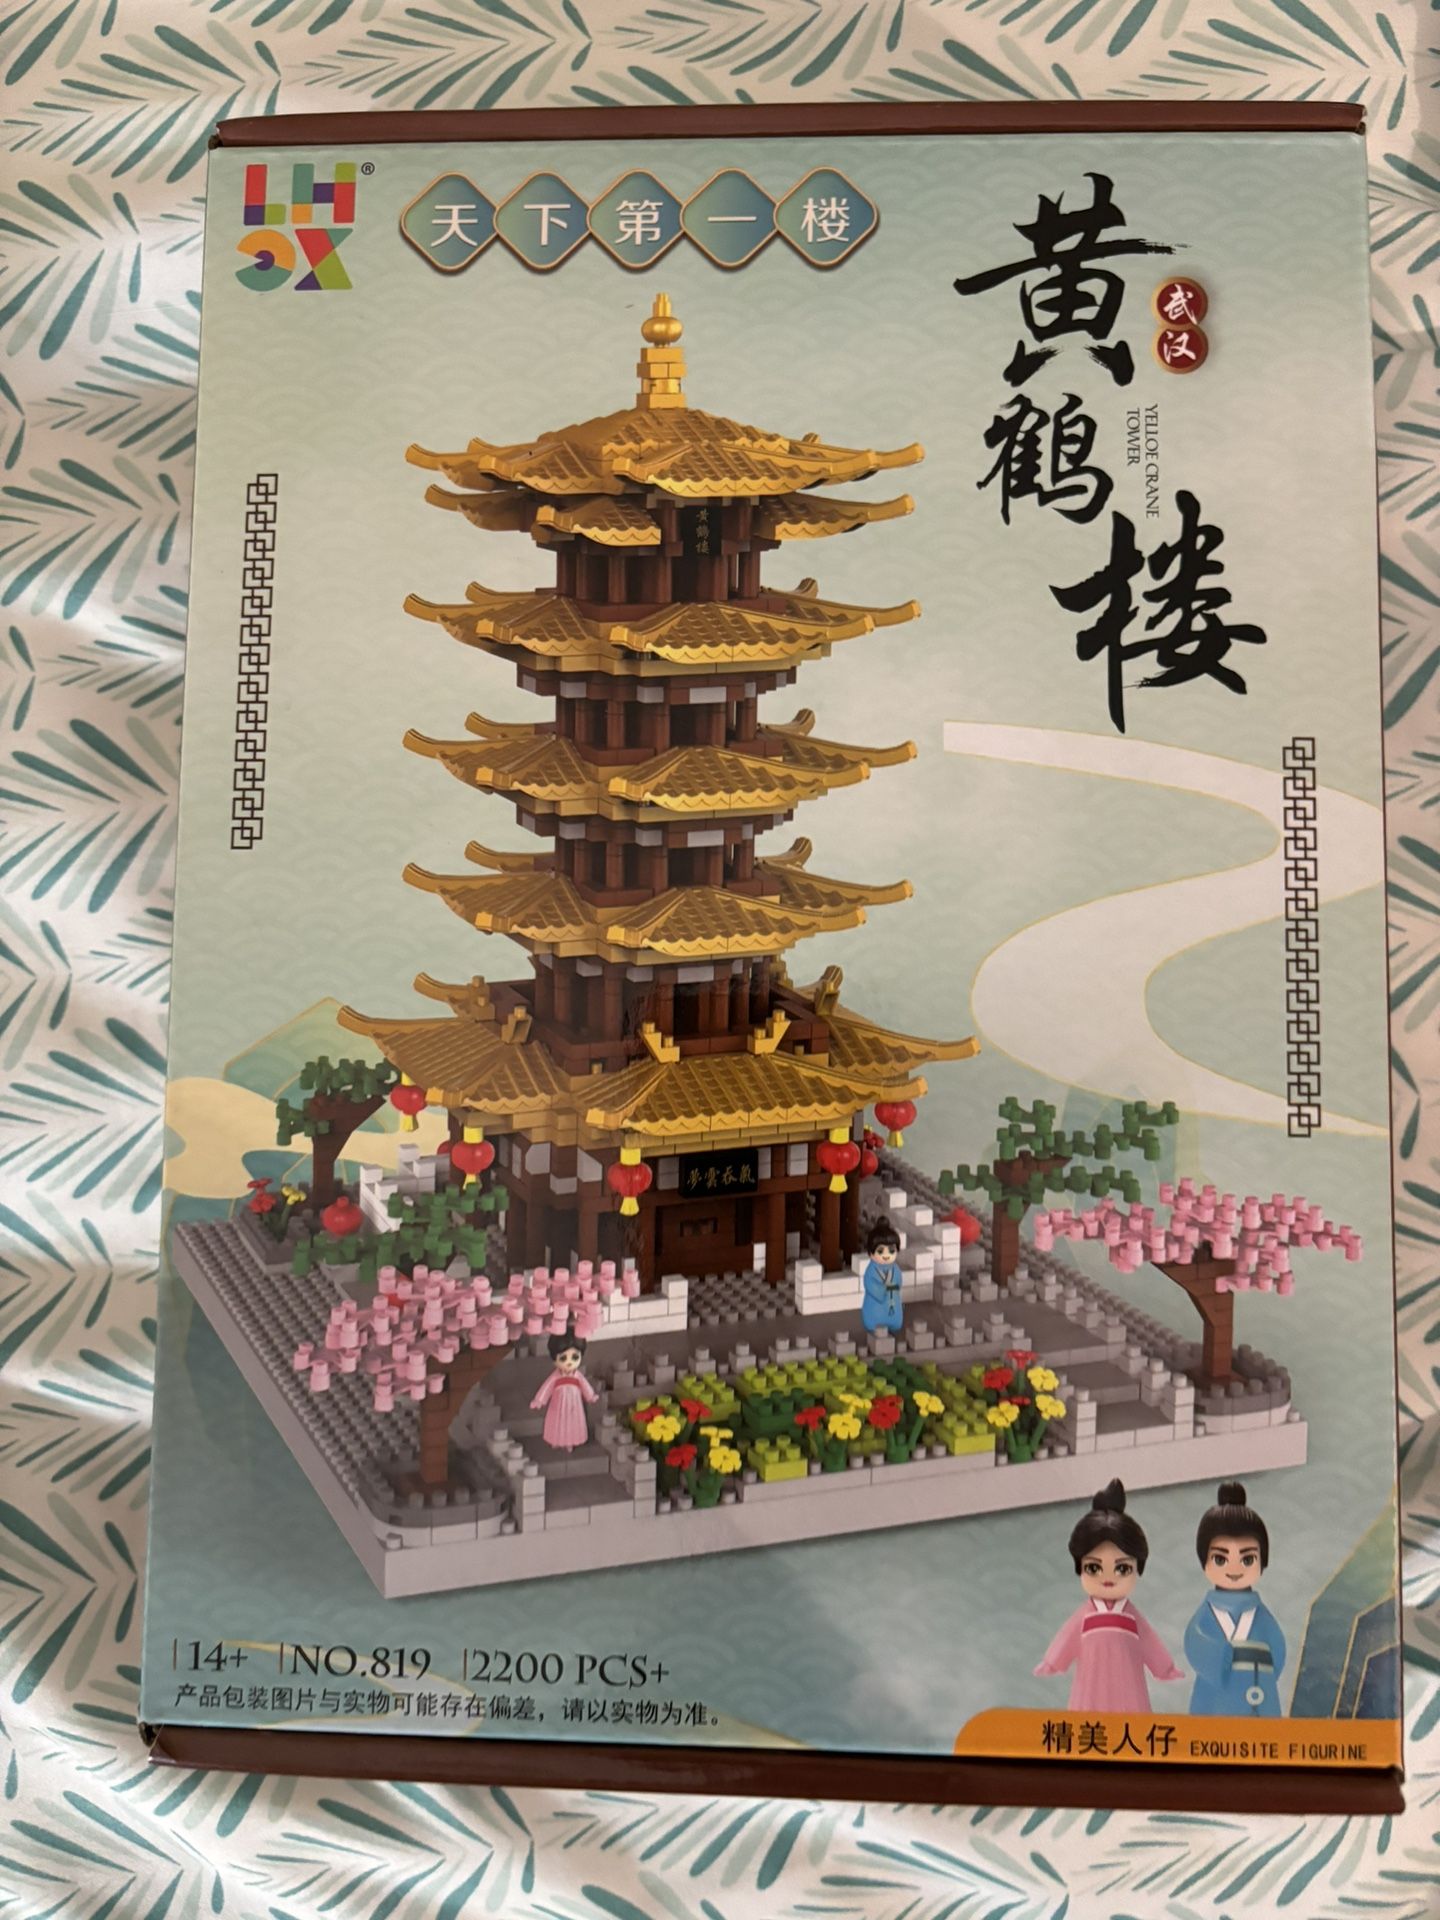 Chinese Temple Lego Set